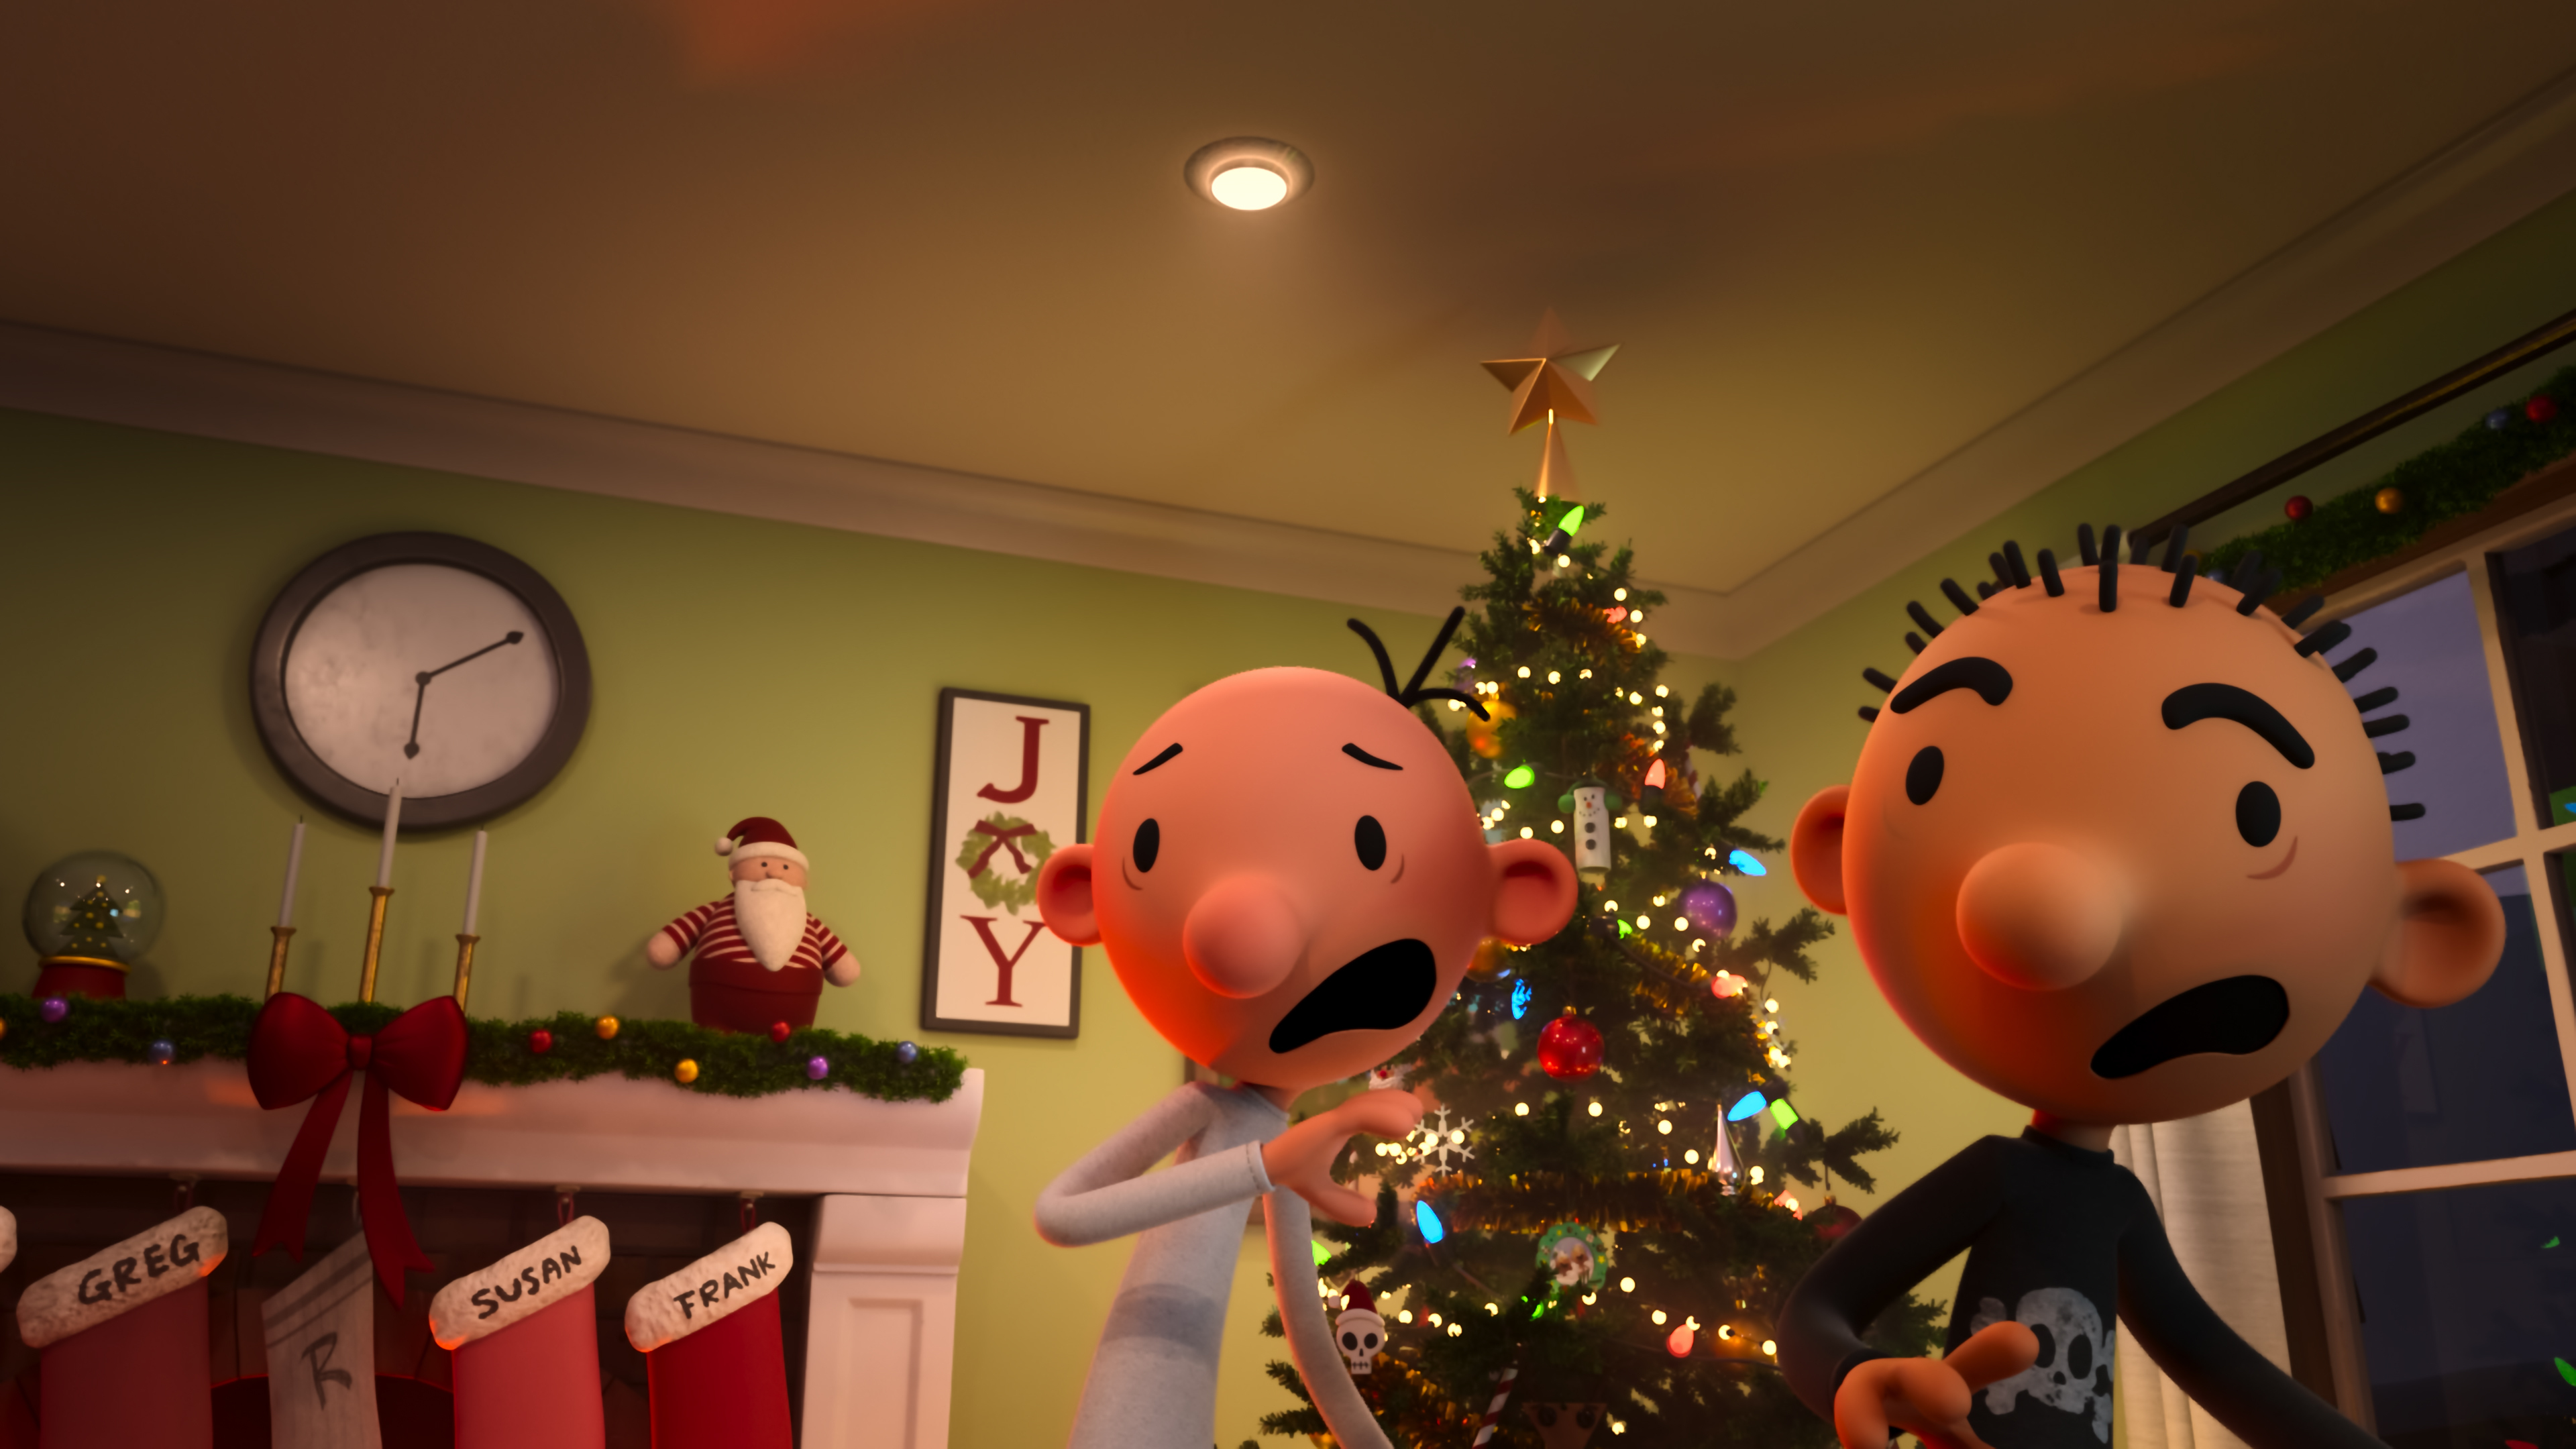 cabin christmas scene animated motion